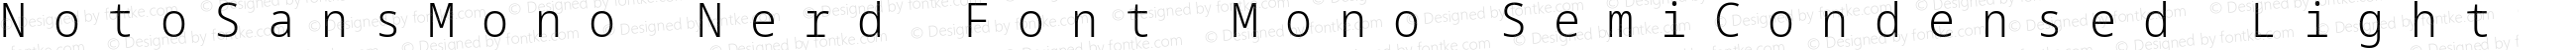 Noto Sans Mono SemiCondensed Light Nerd Font Complete Mono